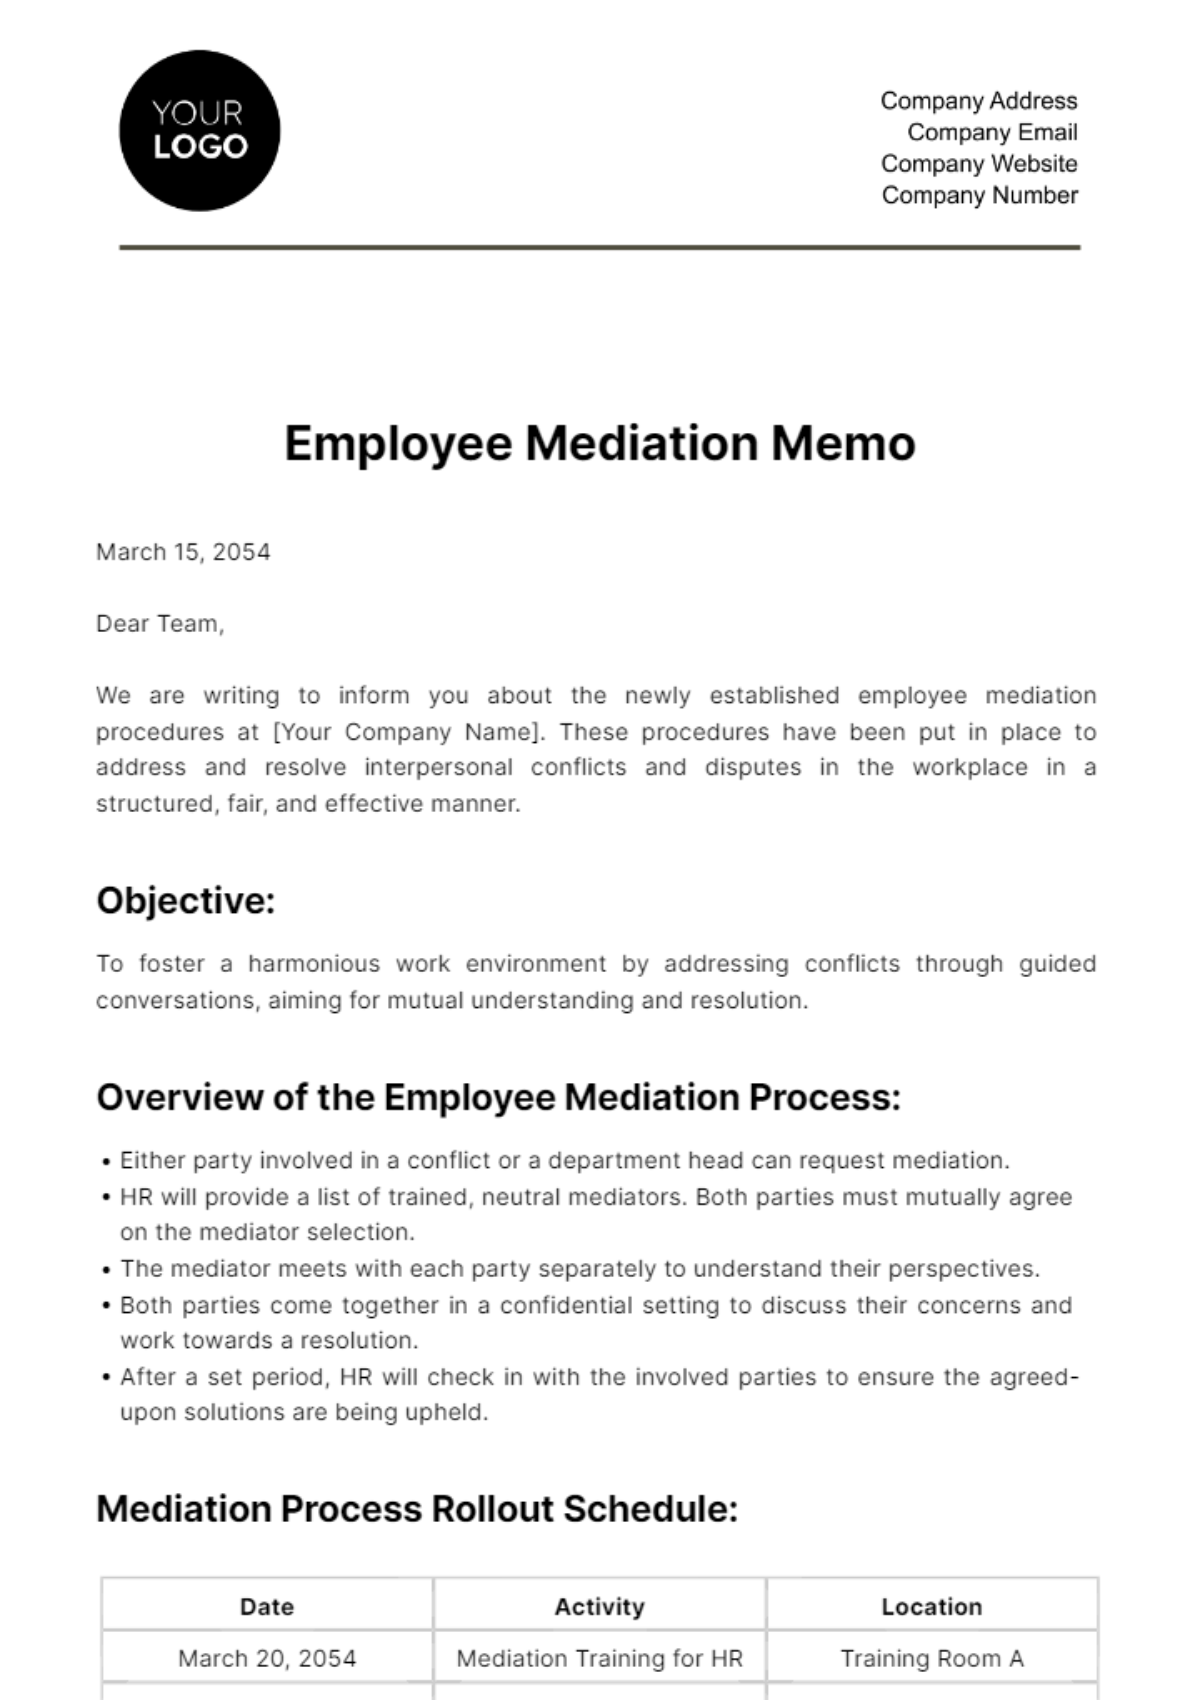 Employee Mediation Memo HR Template